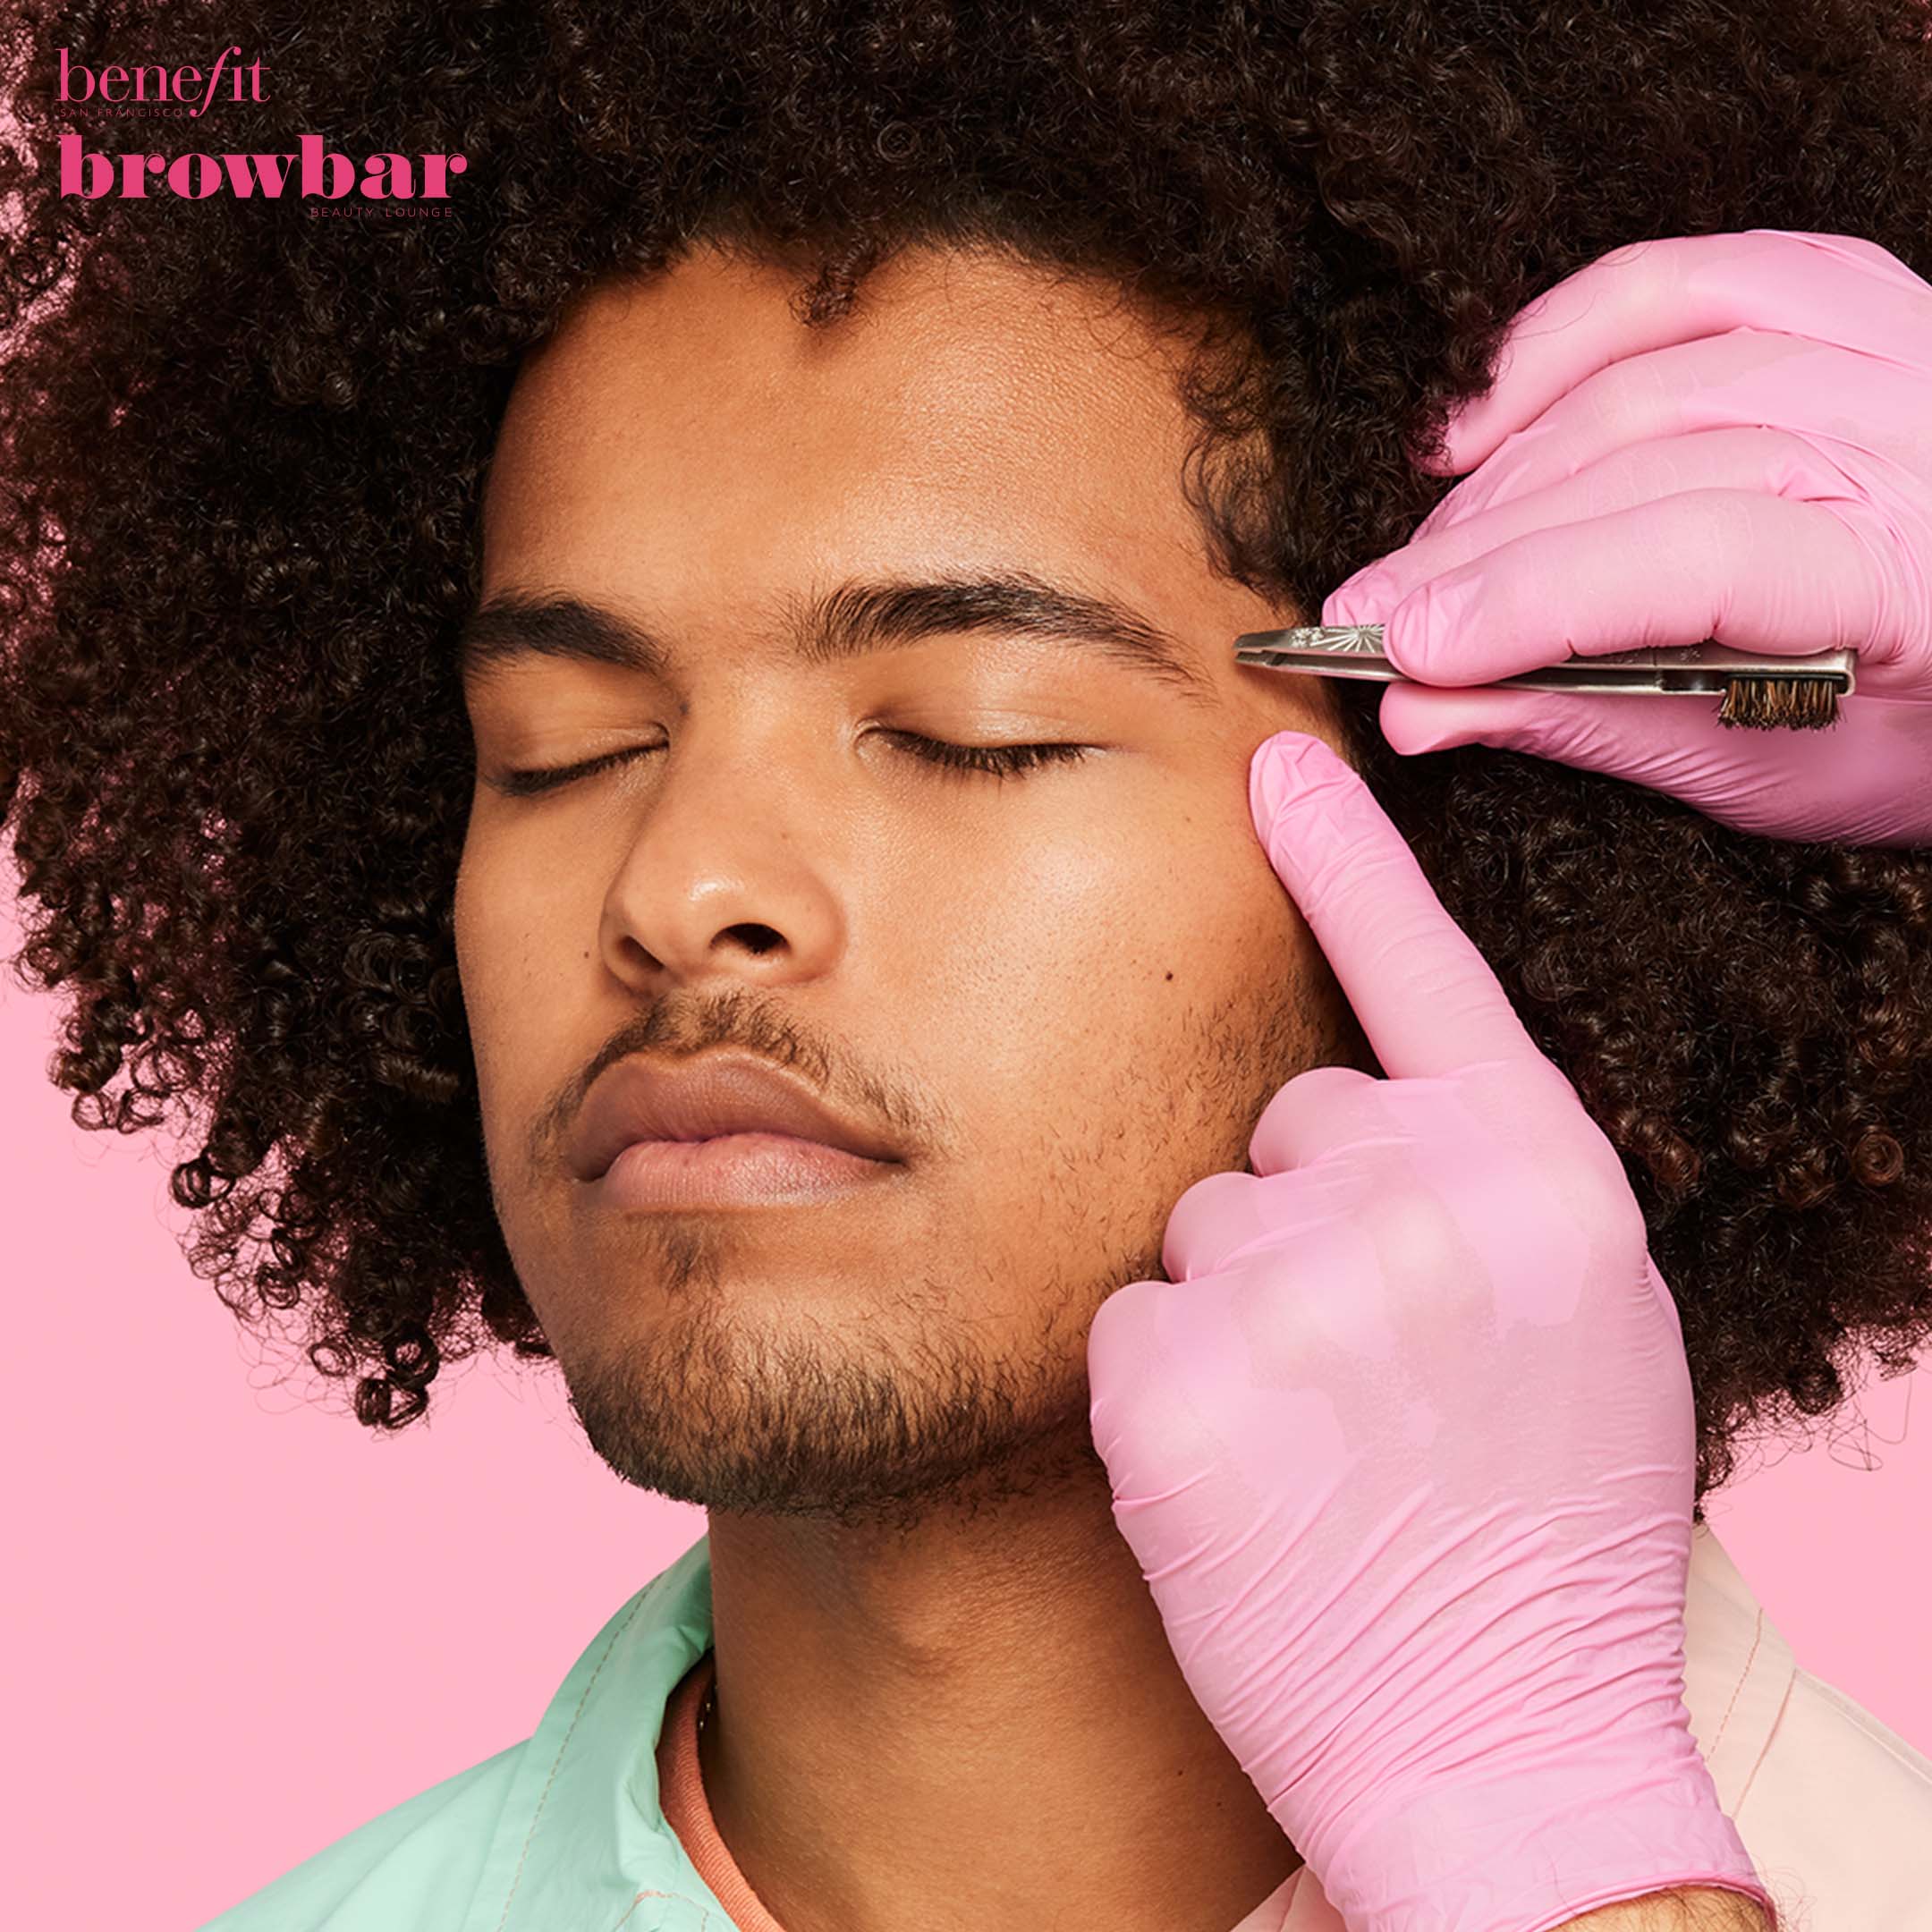 Benefit Cosmetics Boutique & BrowBar lounge Toronto (416)440-2769